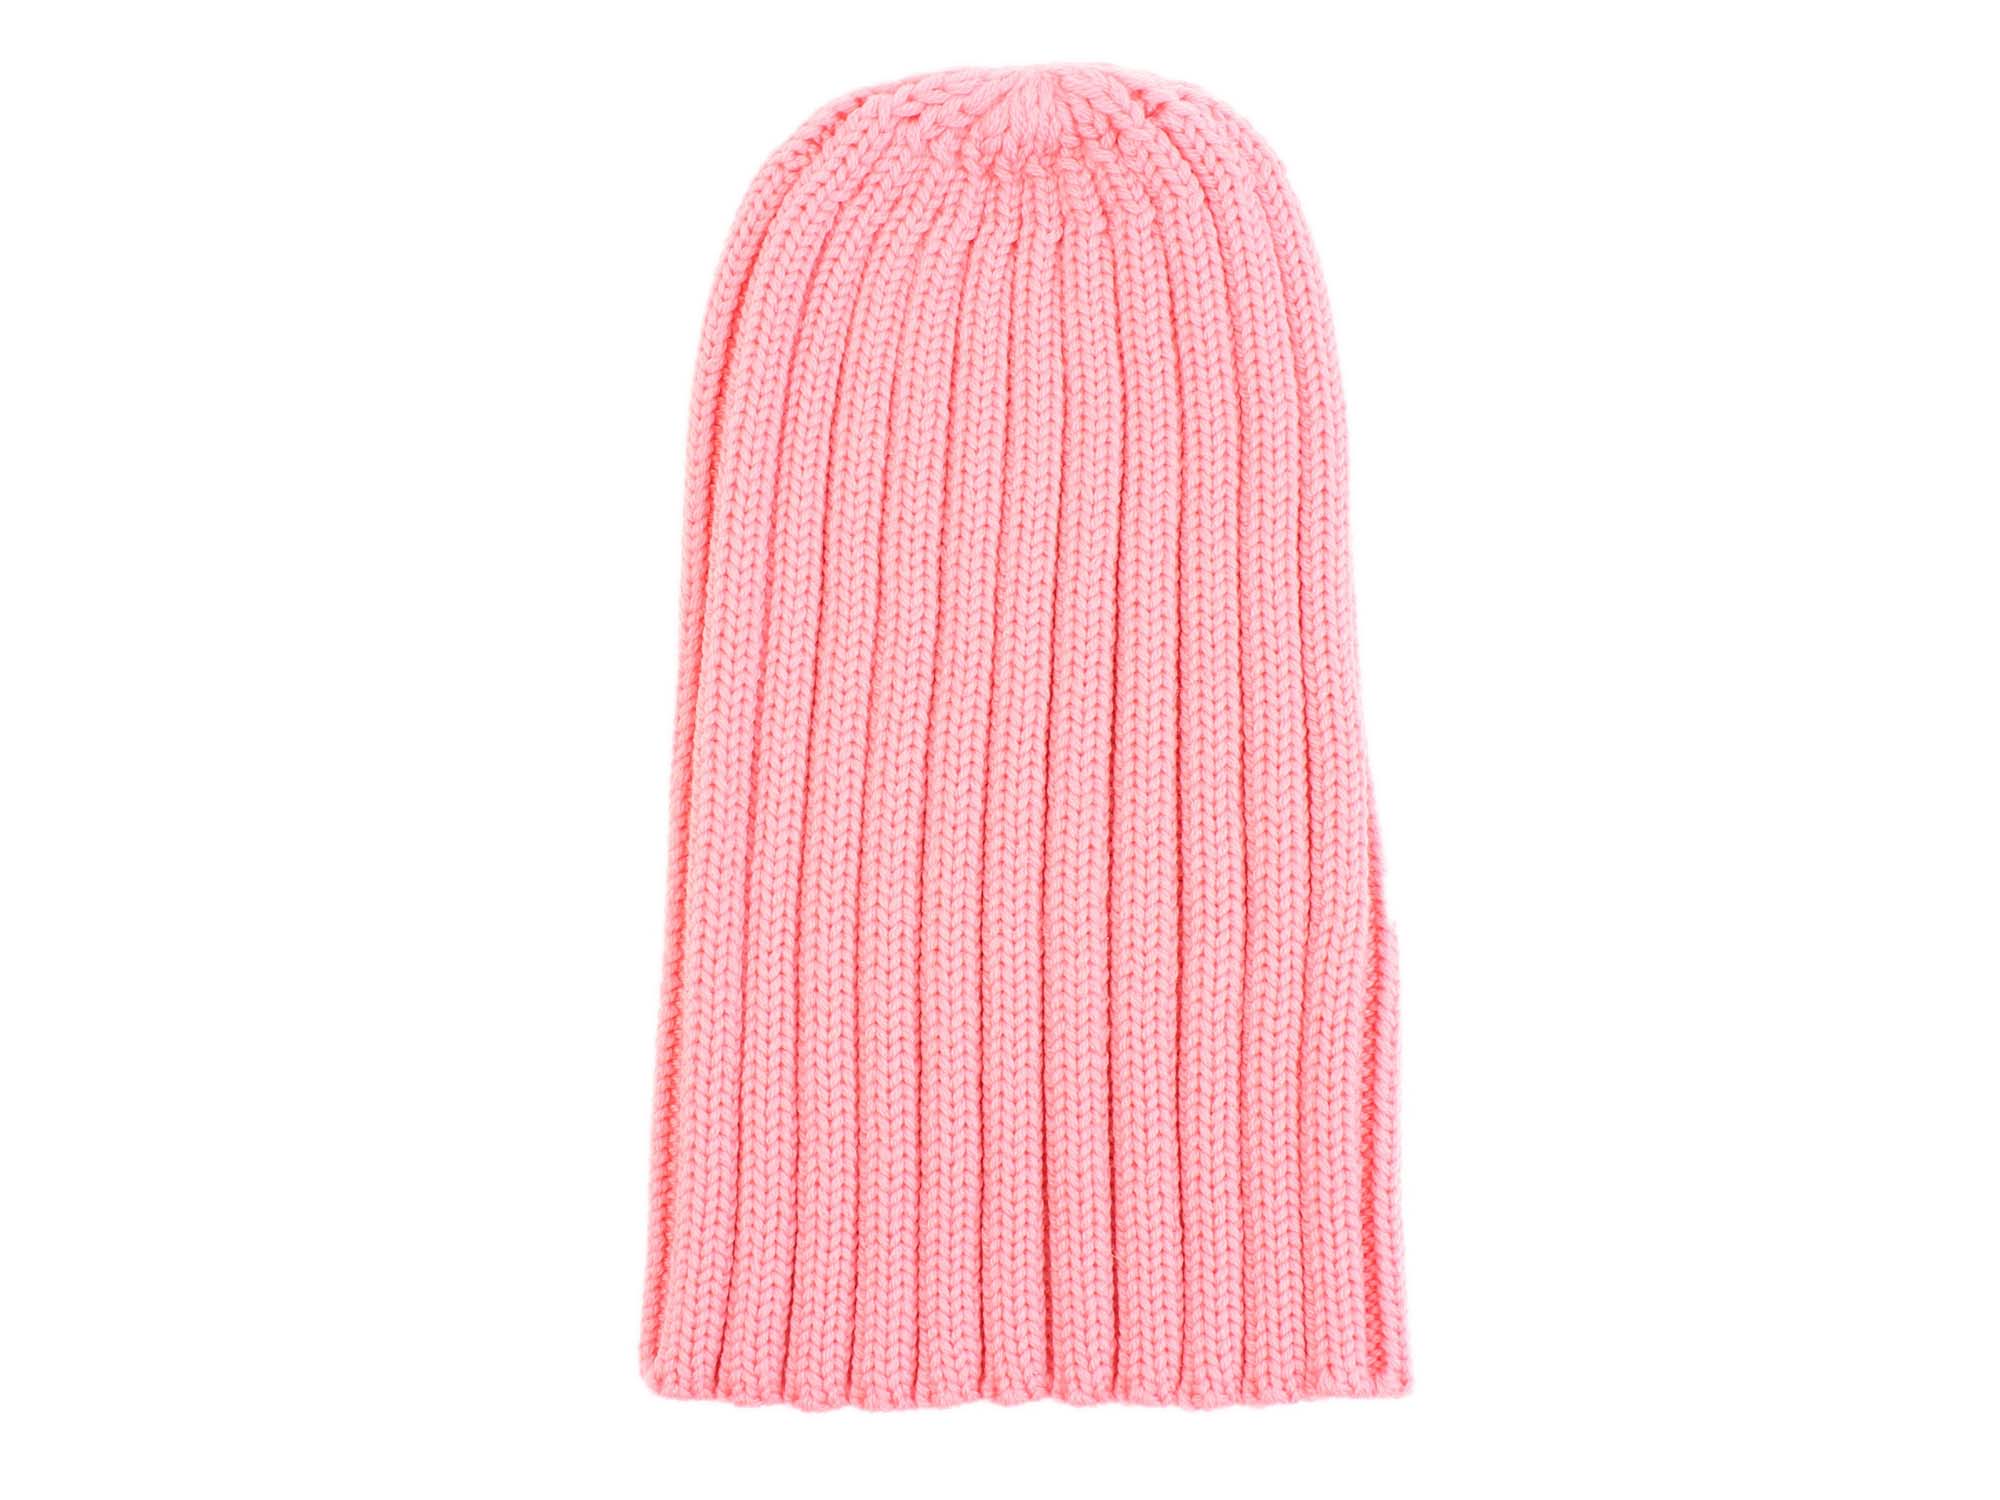 100% Merino Wool Hat: Pink - 1292-JS02PK-AS (L24)